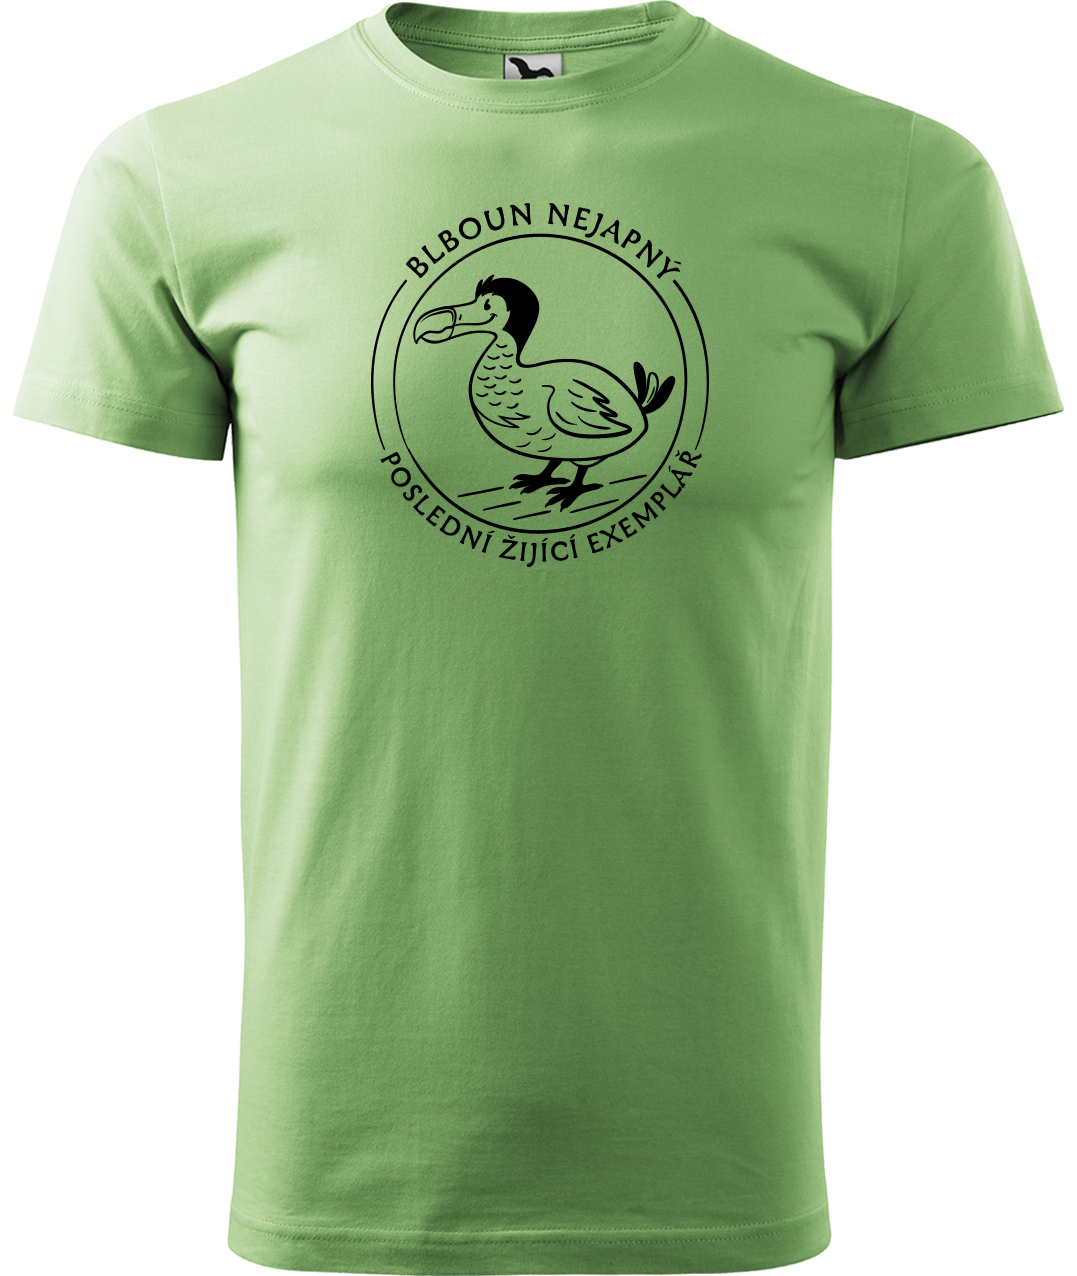 Vtipné tričko - Blboun nejapný Velikost: M, Barva: Apple Green (92)